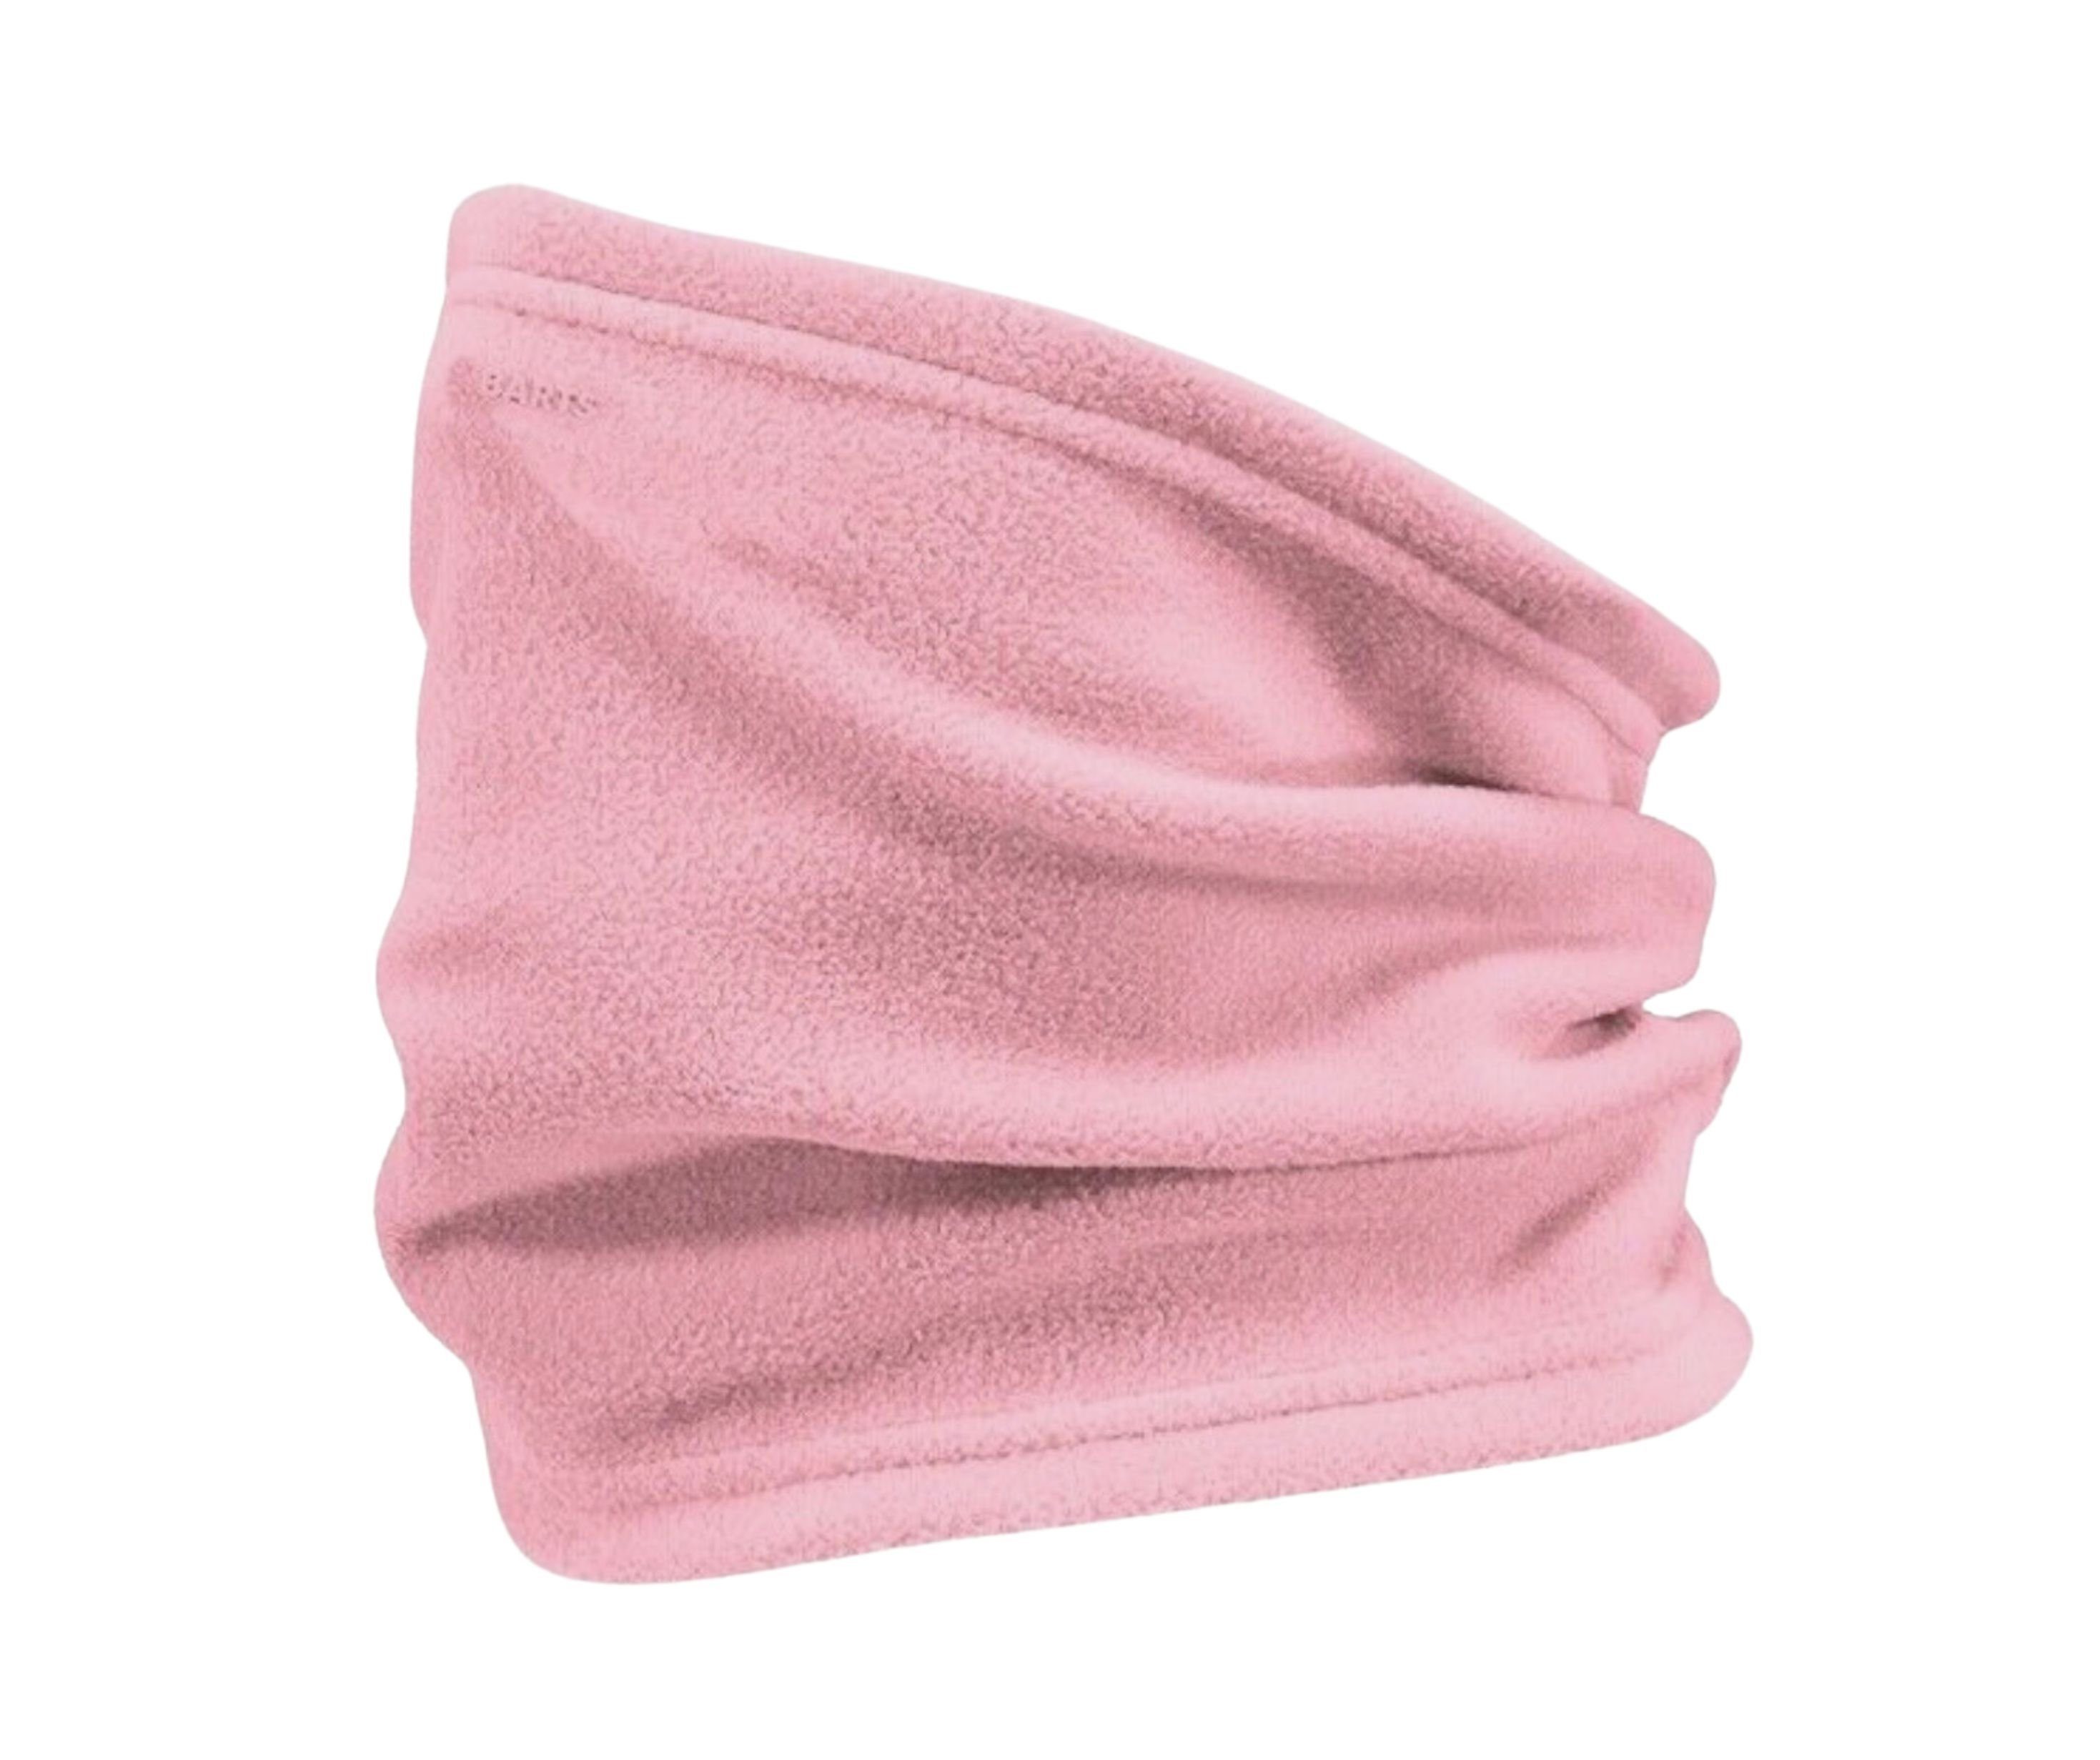 Fleece Loop Weicher isolierender Mädchen Barts Loop Barts rosa, Loop Fleece farbe